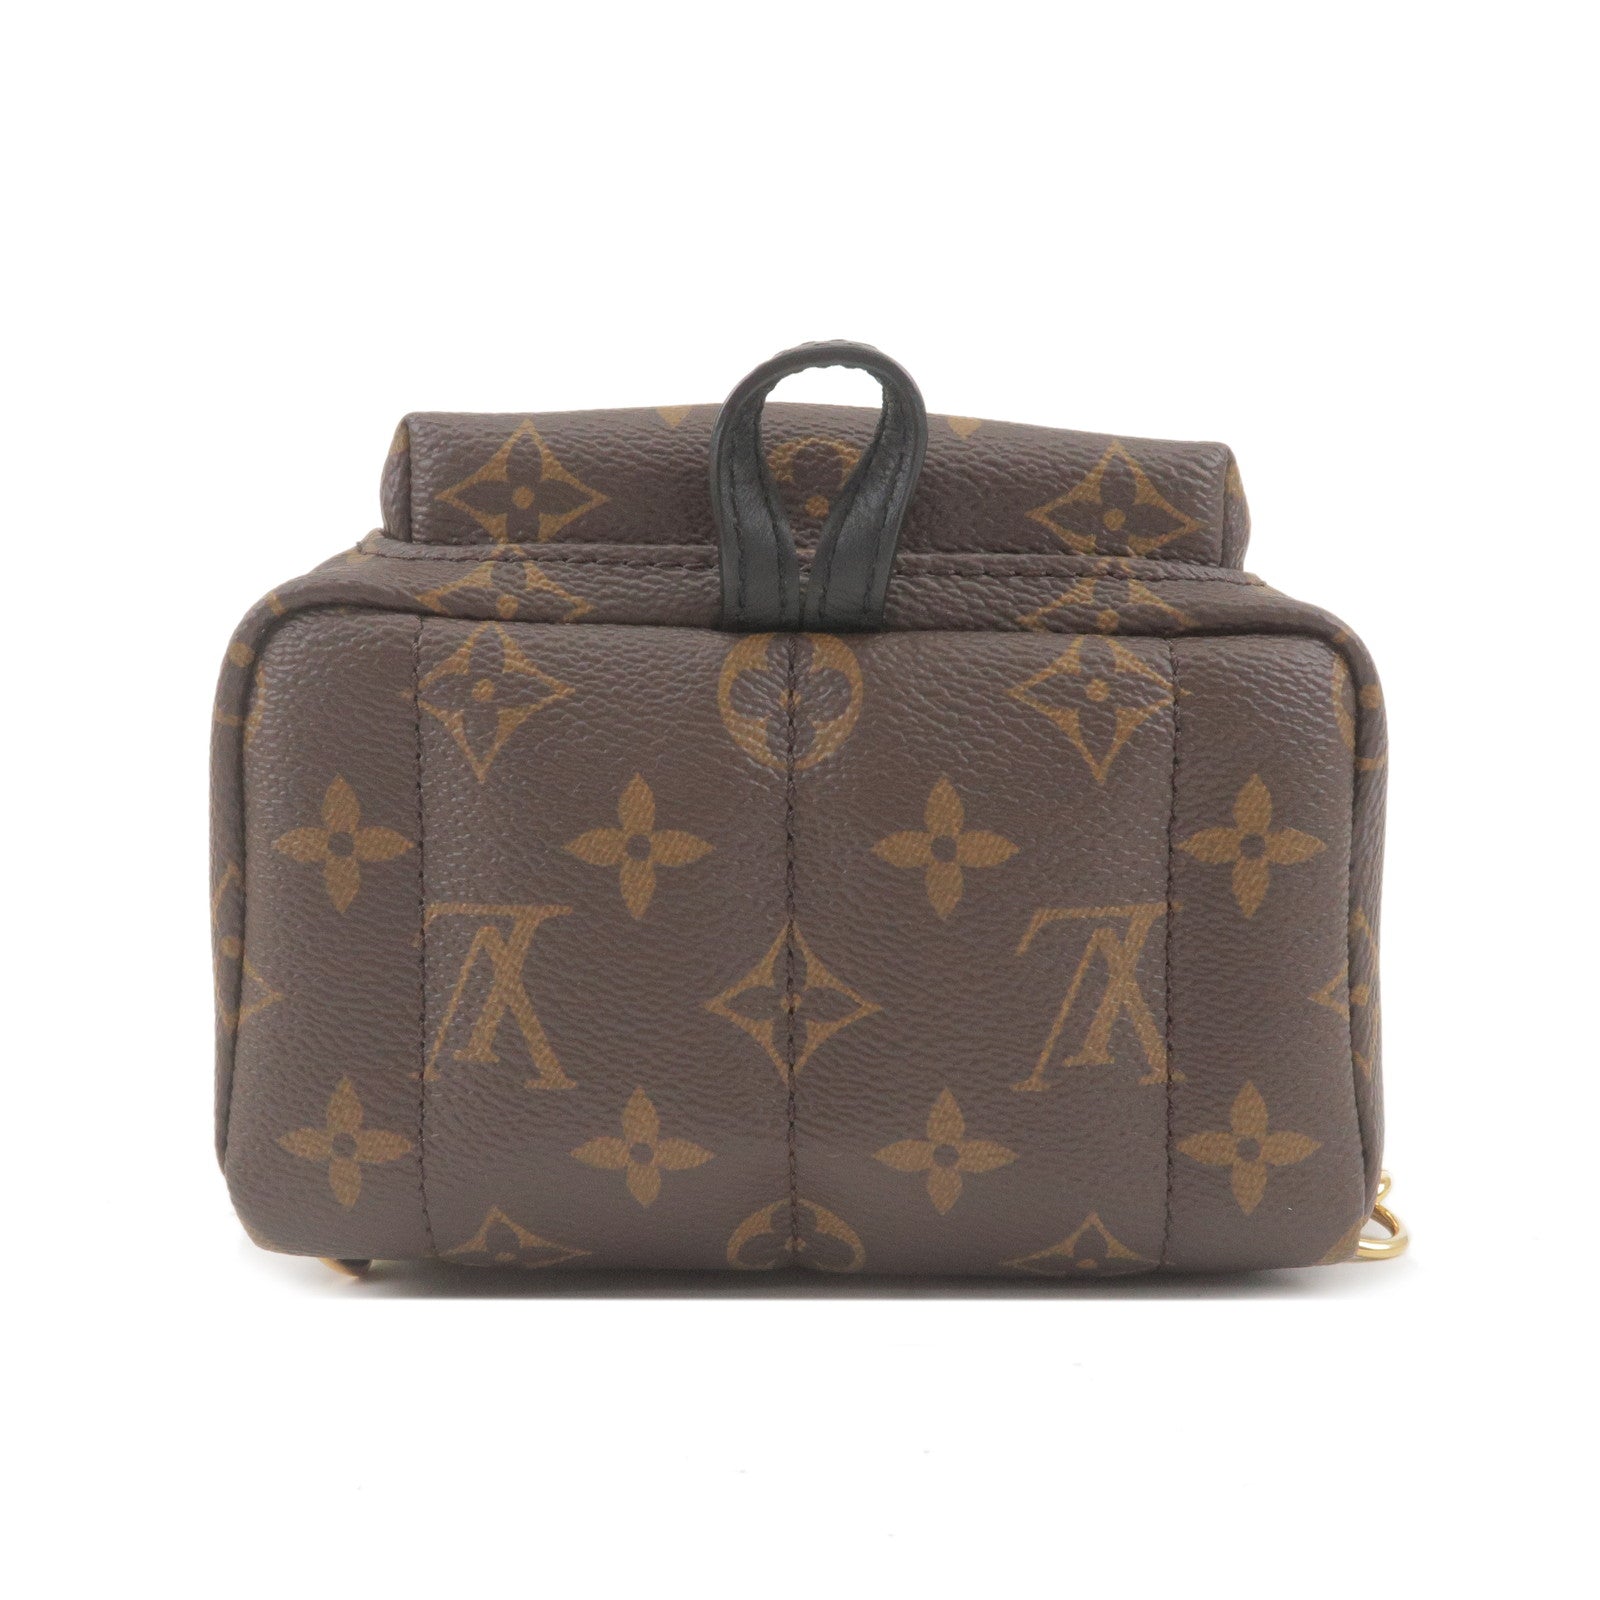 Monogram Viva Cite PM Shoulder Bag - Louis Vuitton Replica Store